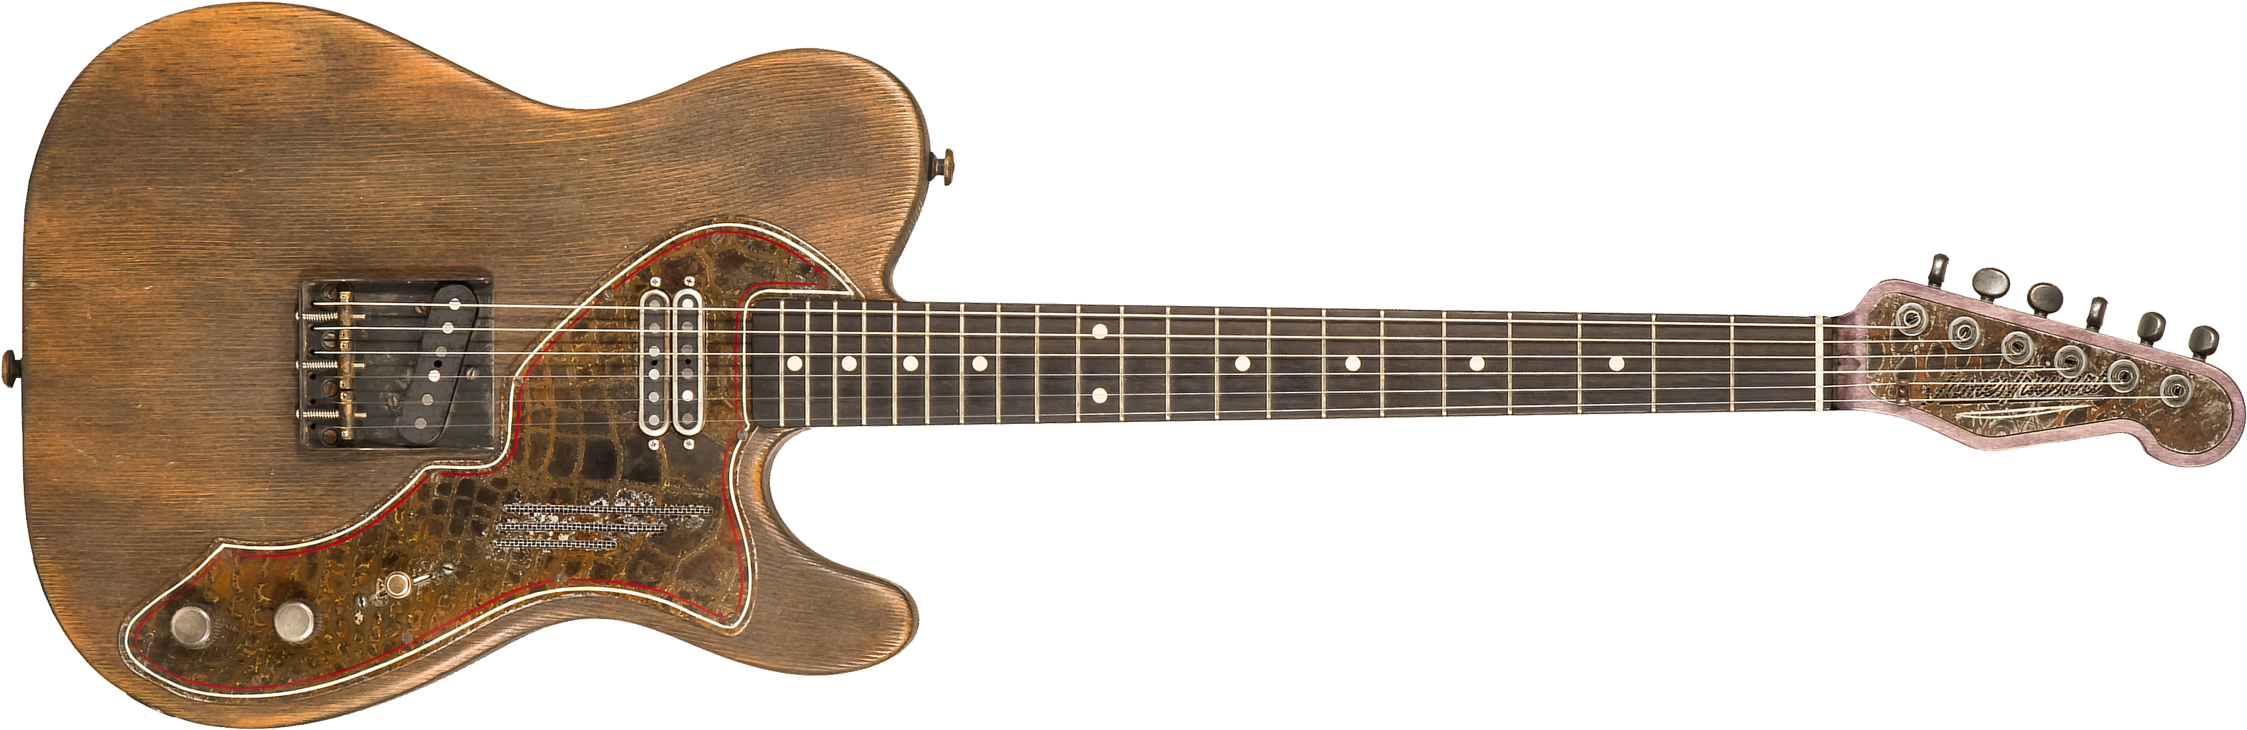 James Trussart Steelguard Caster Sugar Pine Sh Eb #18035 - Rust O Matic Gator Grey Driftwood - Tel shape electric guitar - Main picture